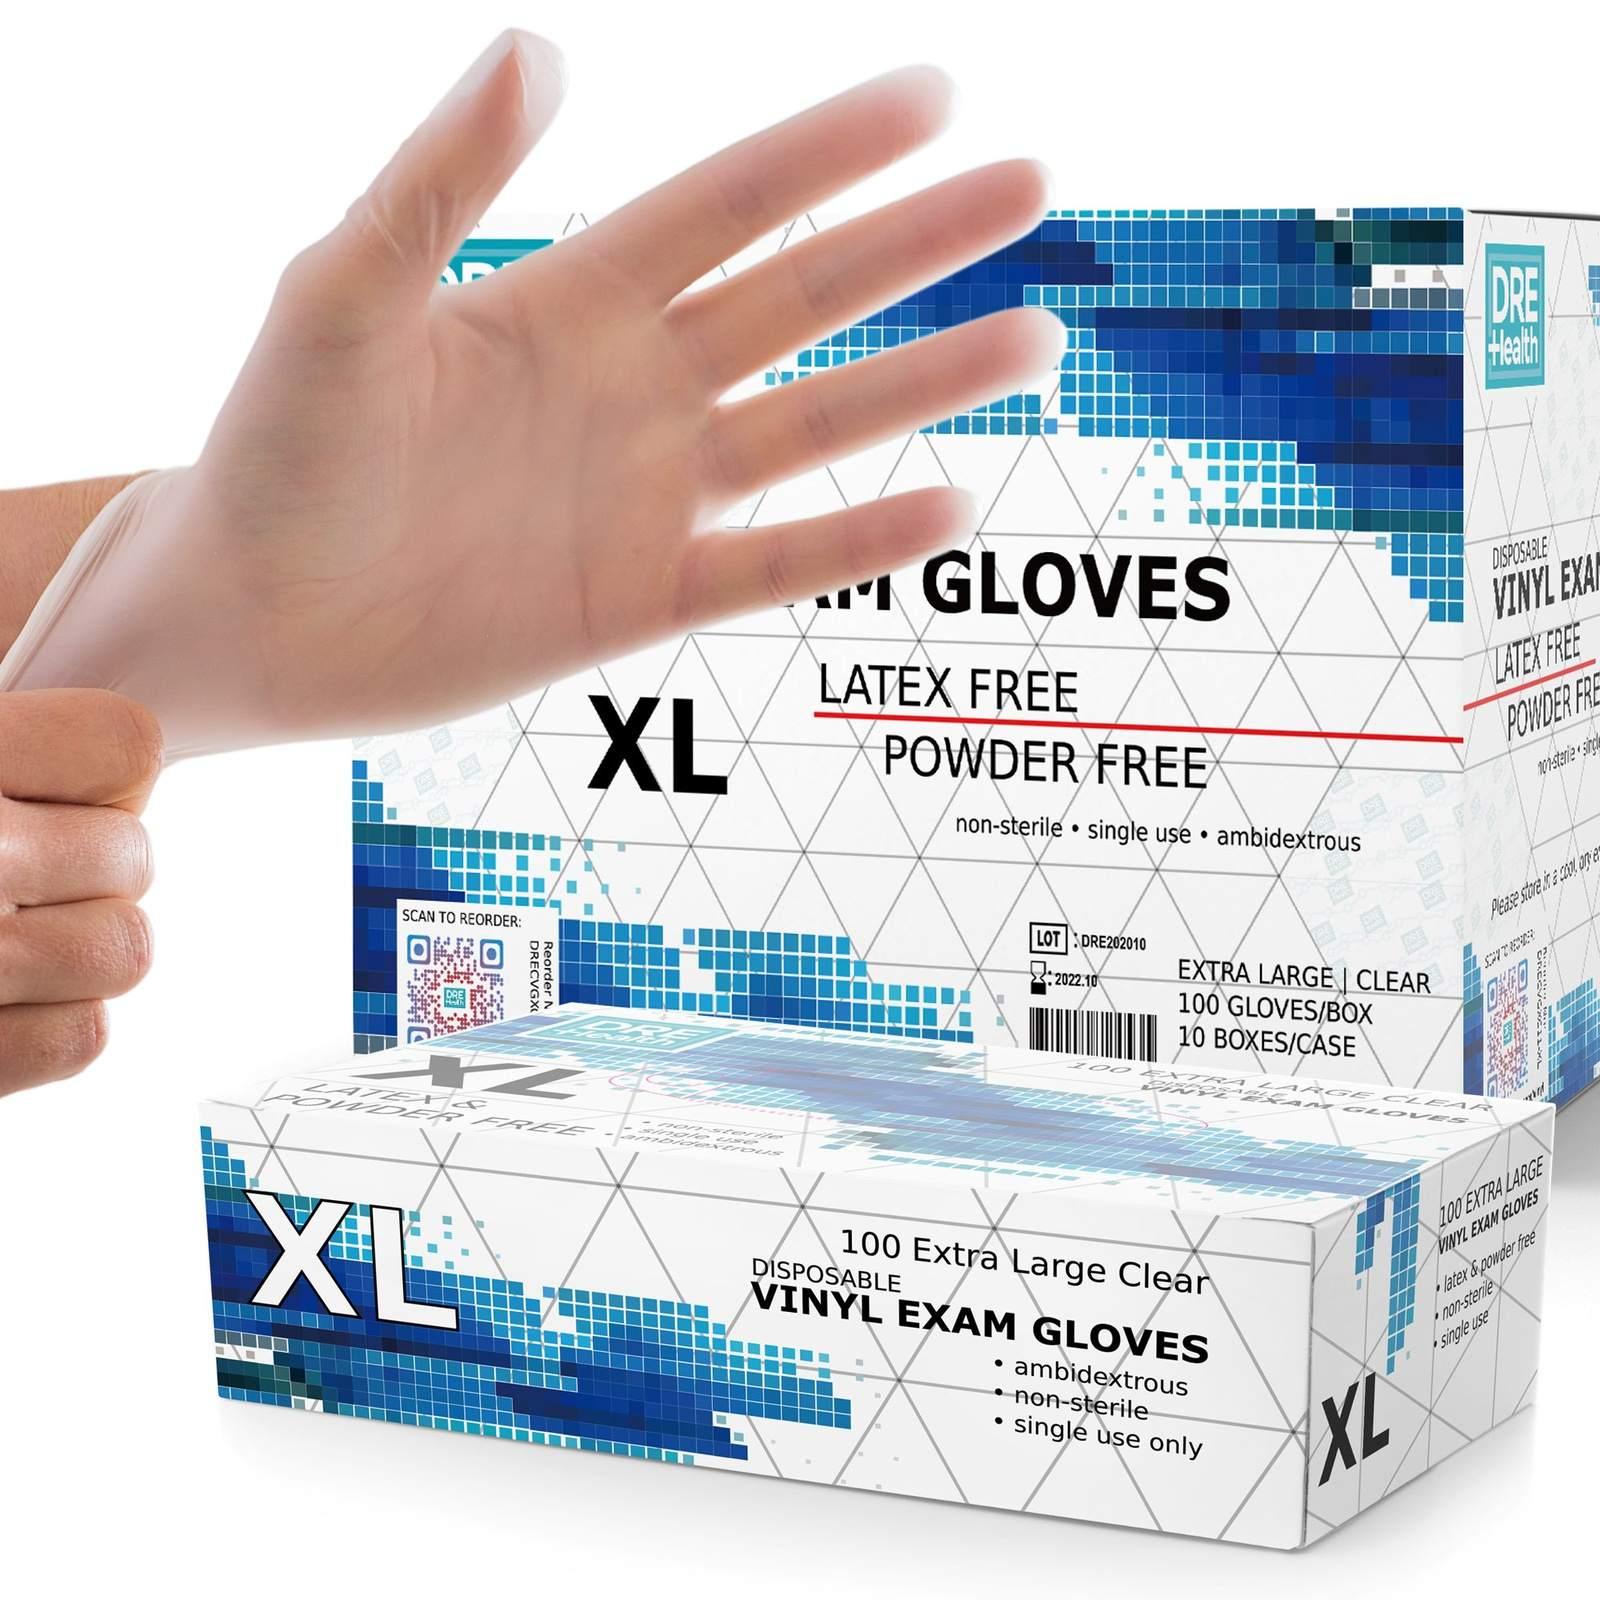 Powder Free Disposable Vinyl Gloves - Clear DRE Health